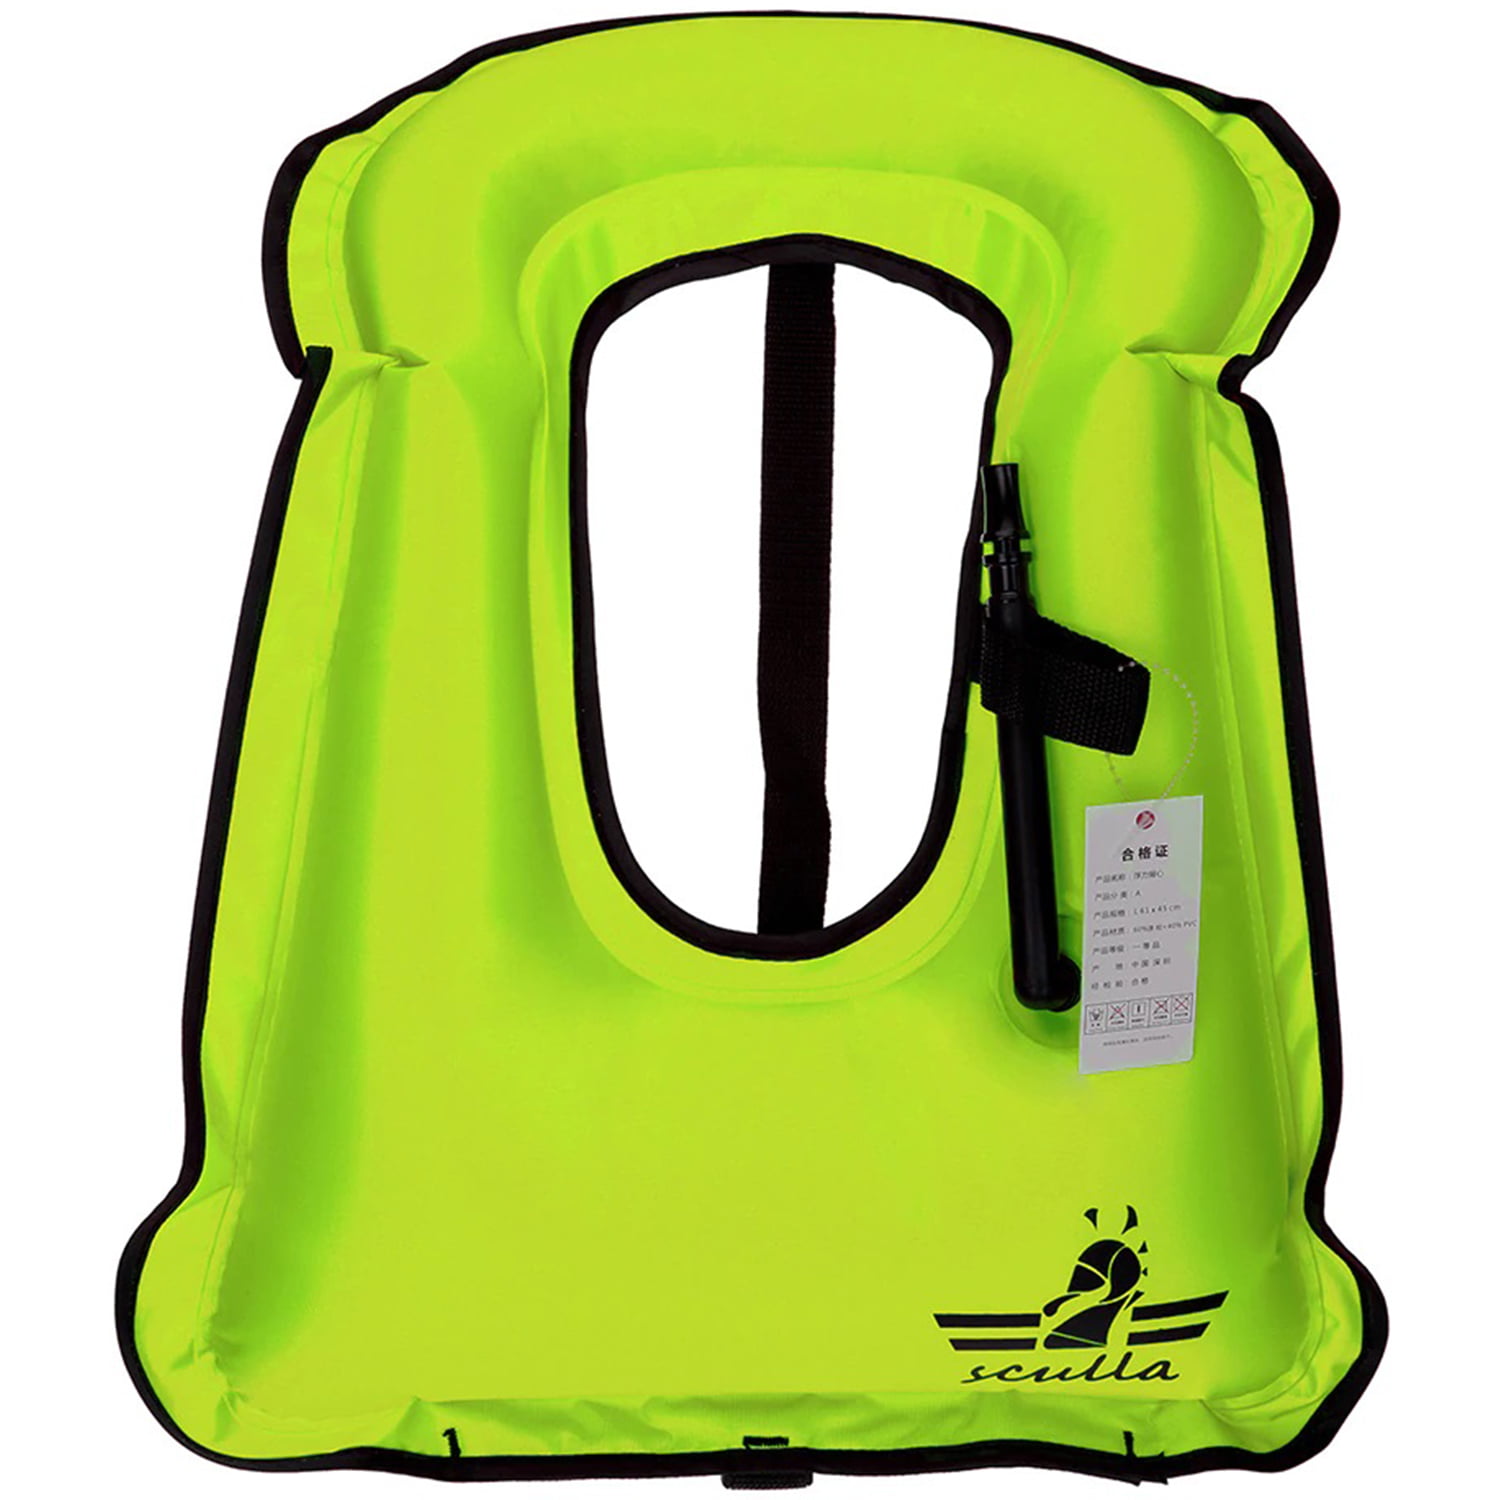 Adjustable Buckled Adult Inflatable Snorkeling Buoyancy Aid Floating Vest 